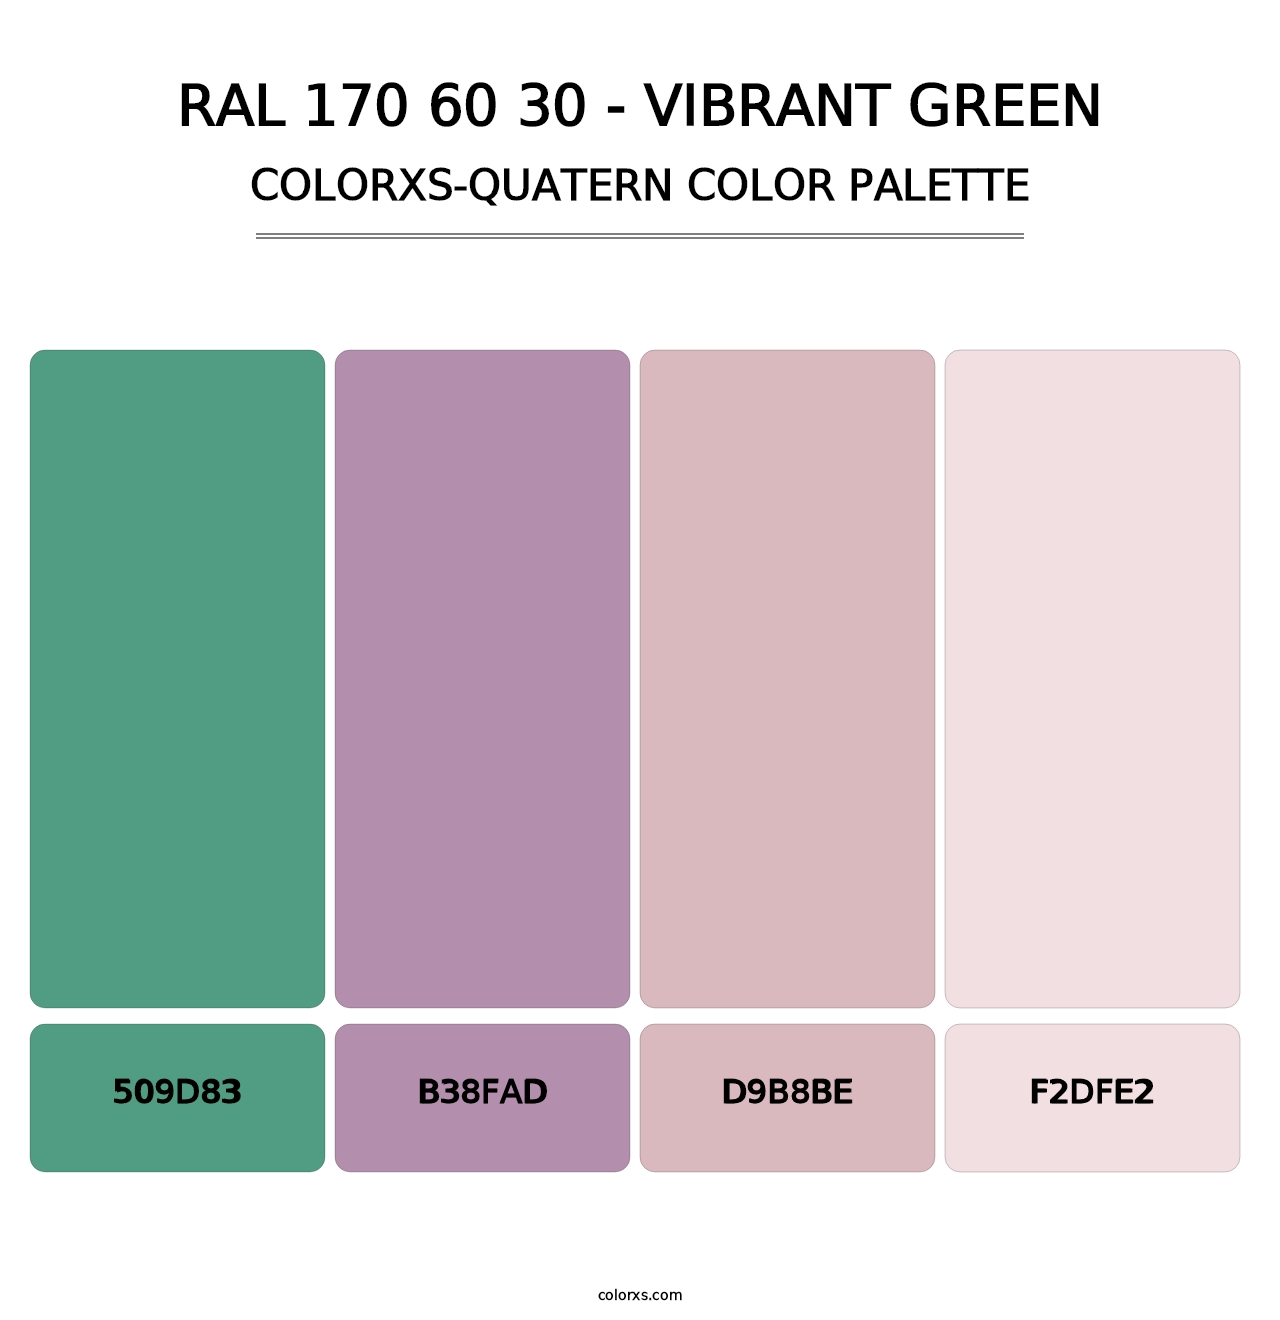 RAL 170 60 30 - Vibrant Green - Colorxs Quatern Palette